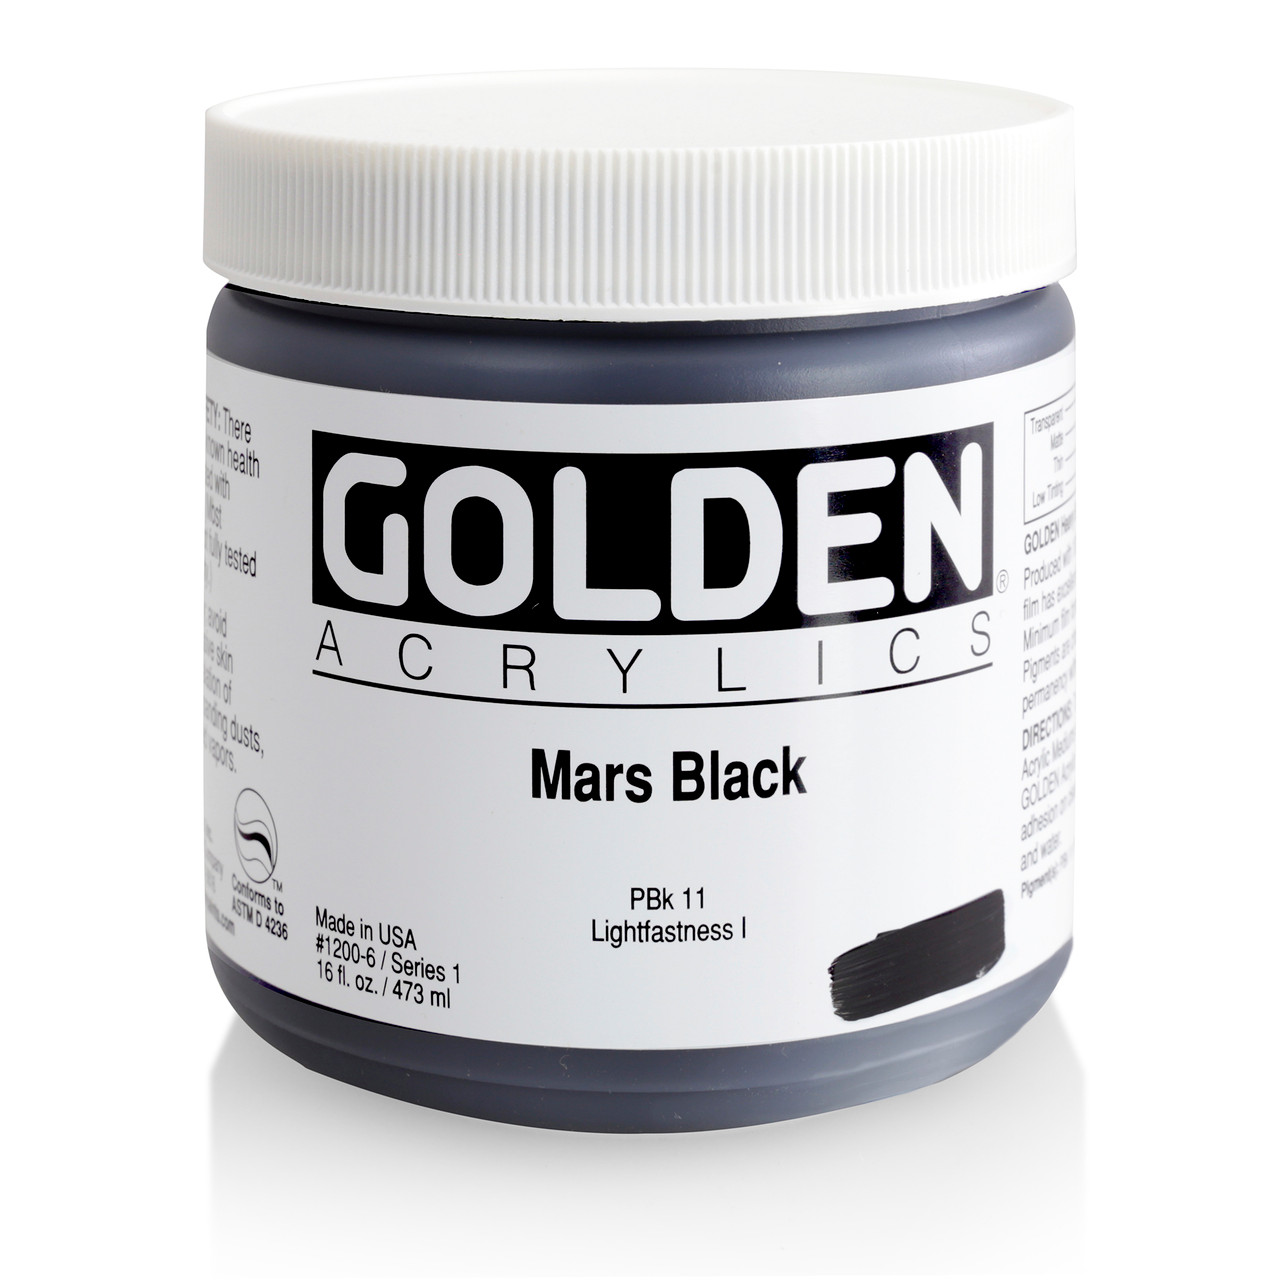 Golden Heavybody Acrylic 473ml Mars Black #1200